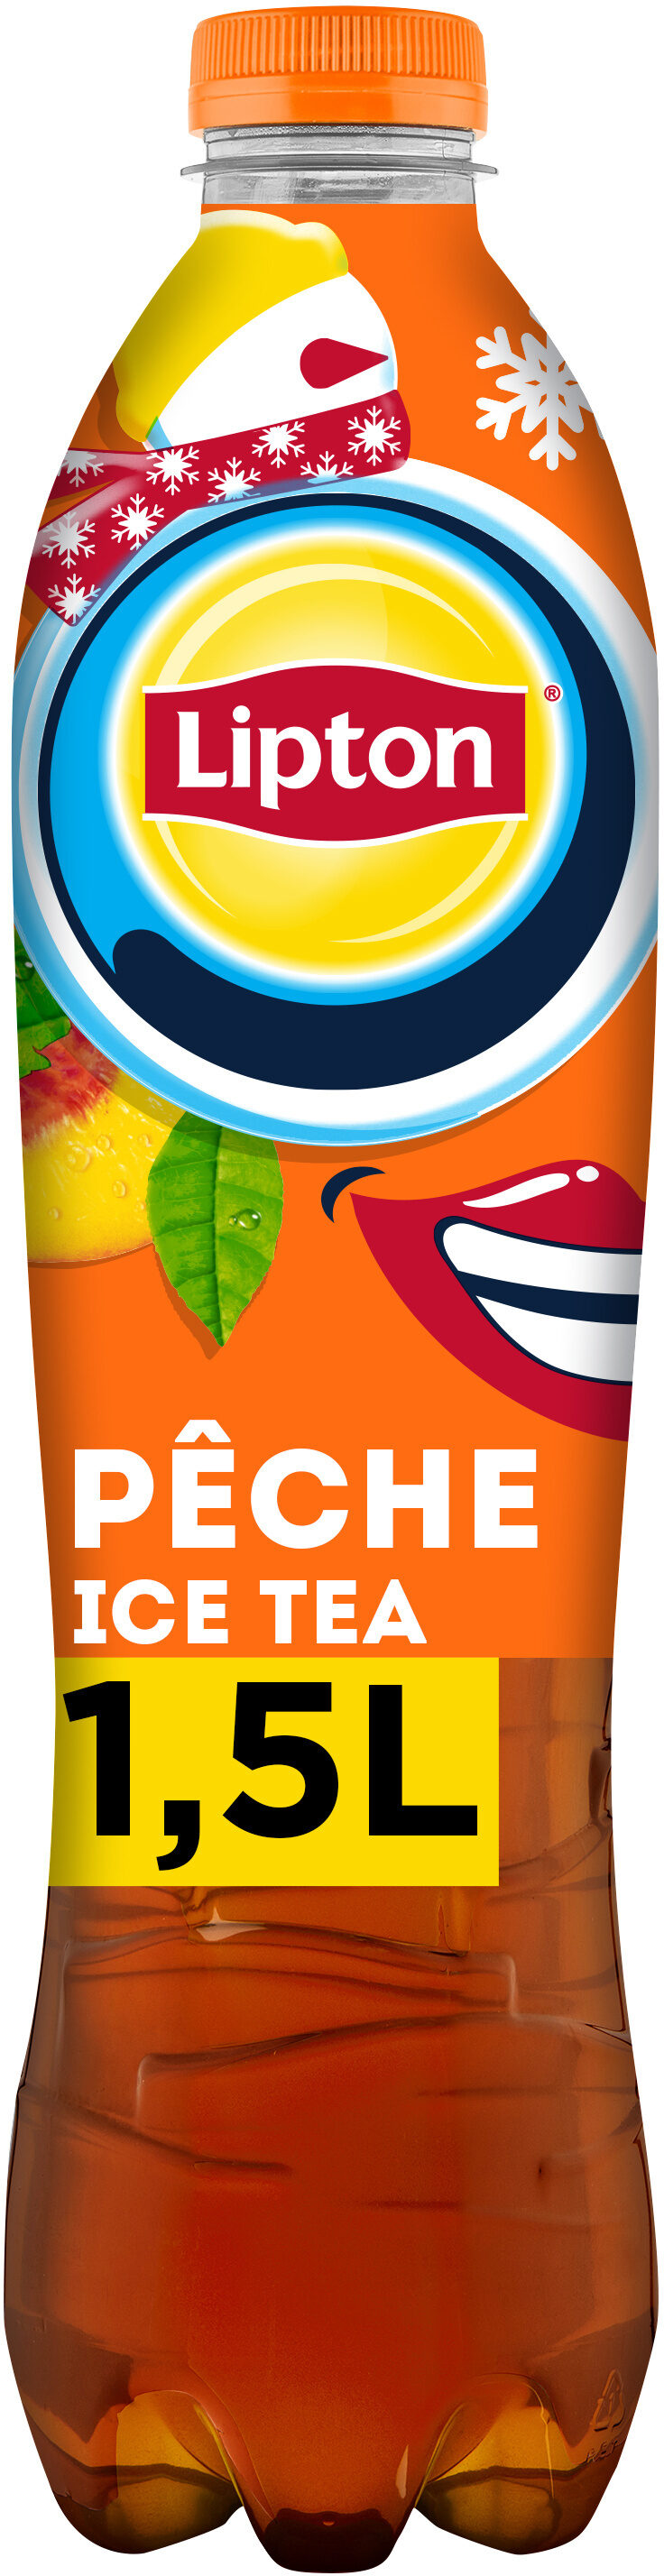 Ice Tea Saveur Peche - Produit